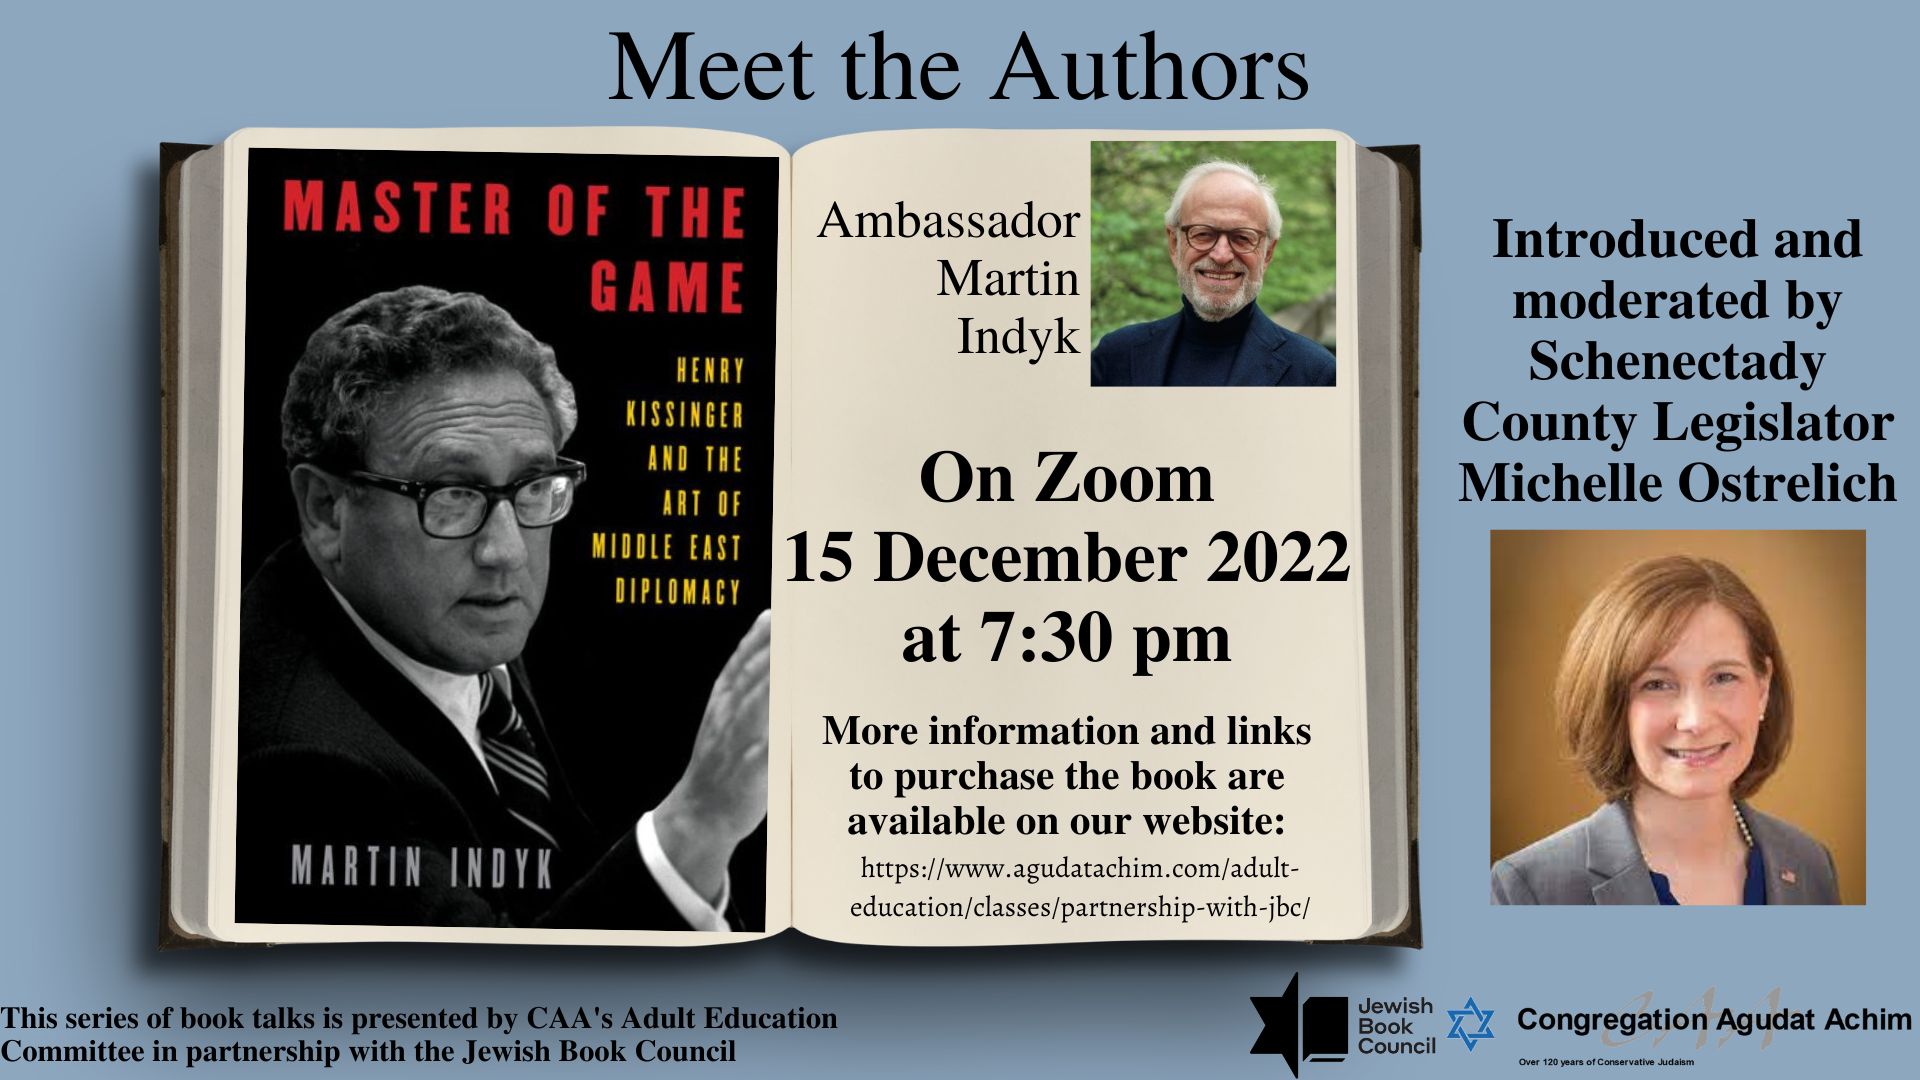 Meet the Authors with Ambassador Martin Indyk